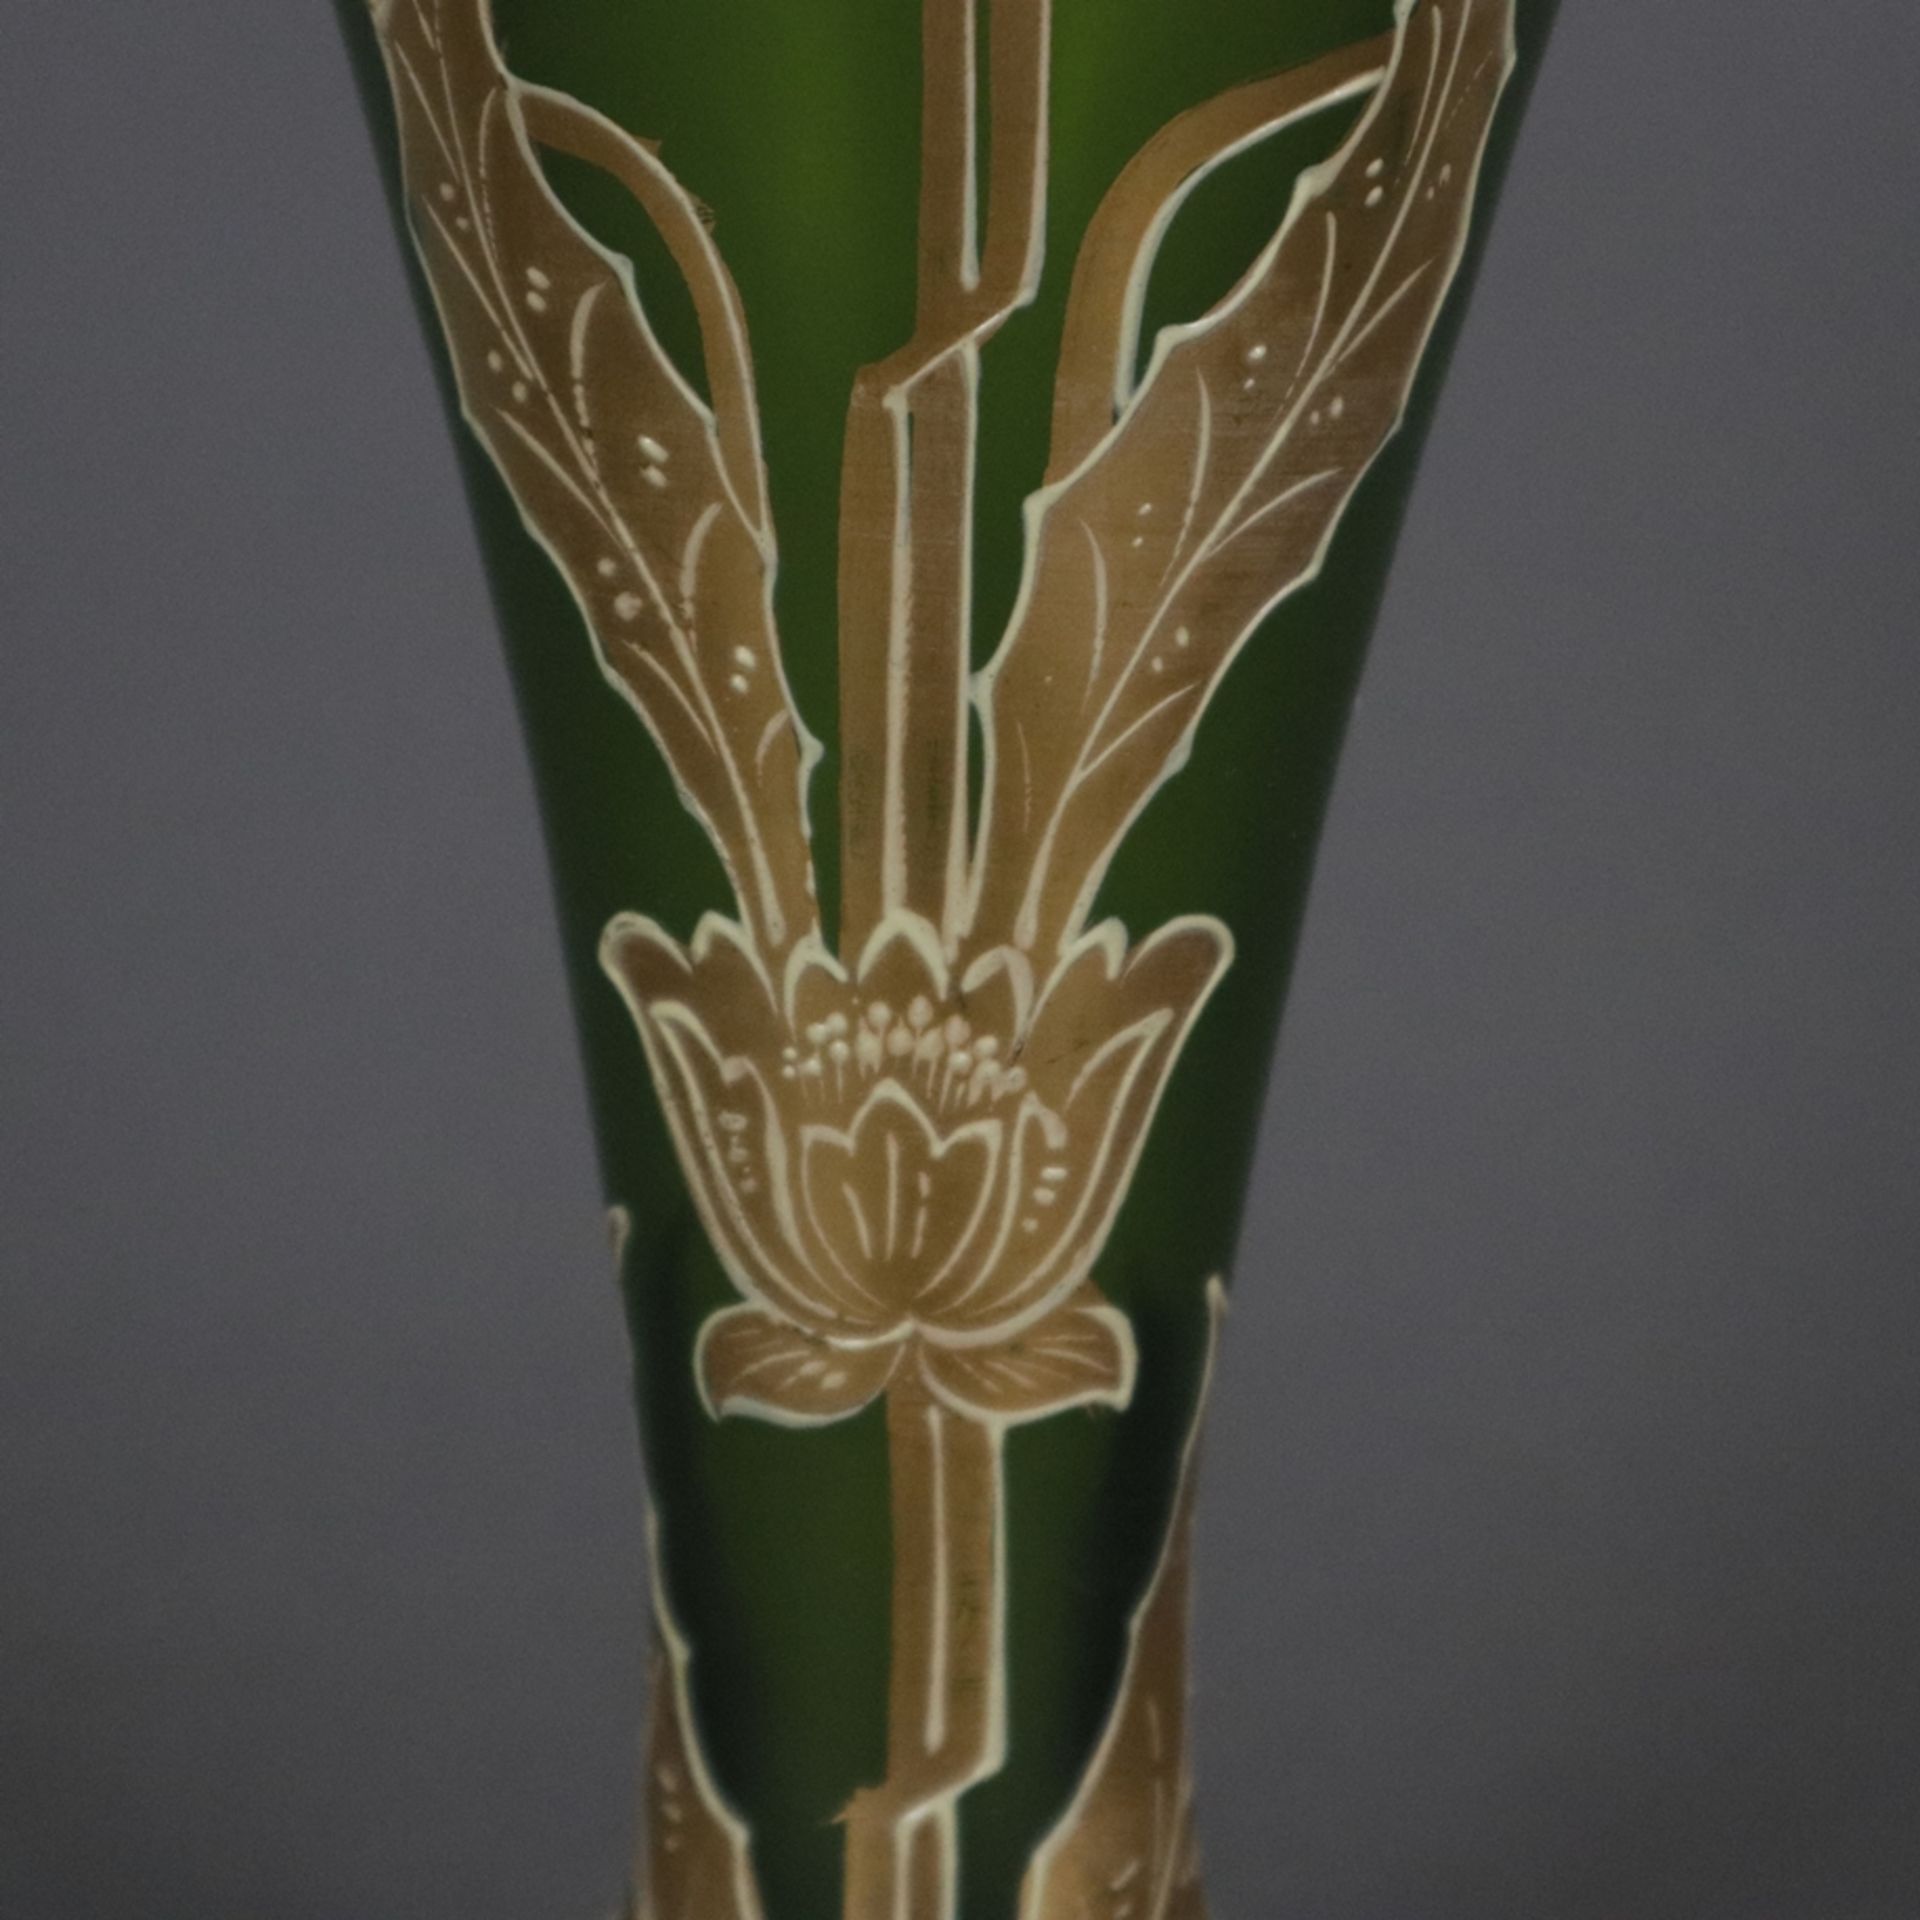 Jugendstil-Glasvase mit Metallmontur - wohl Frankreich um 1900, Klarglas mit grünem Unterfang, scha - Image 5 of 8